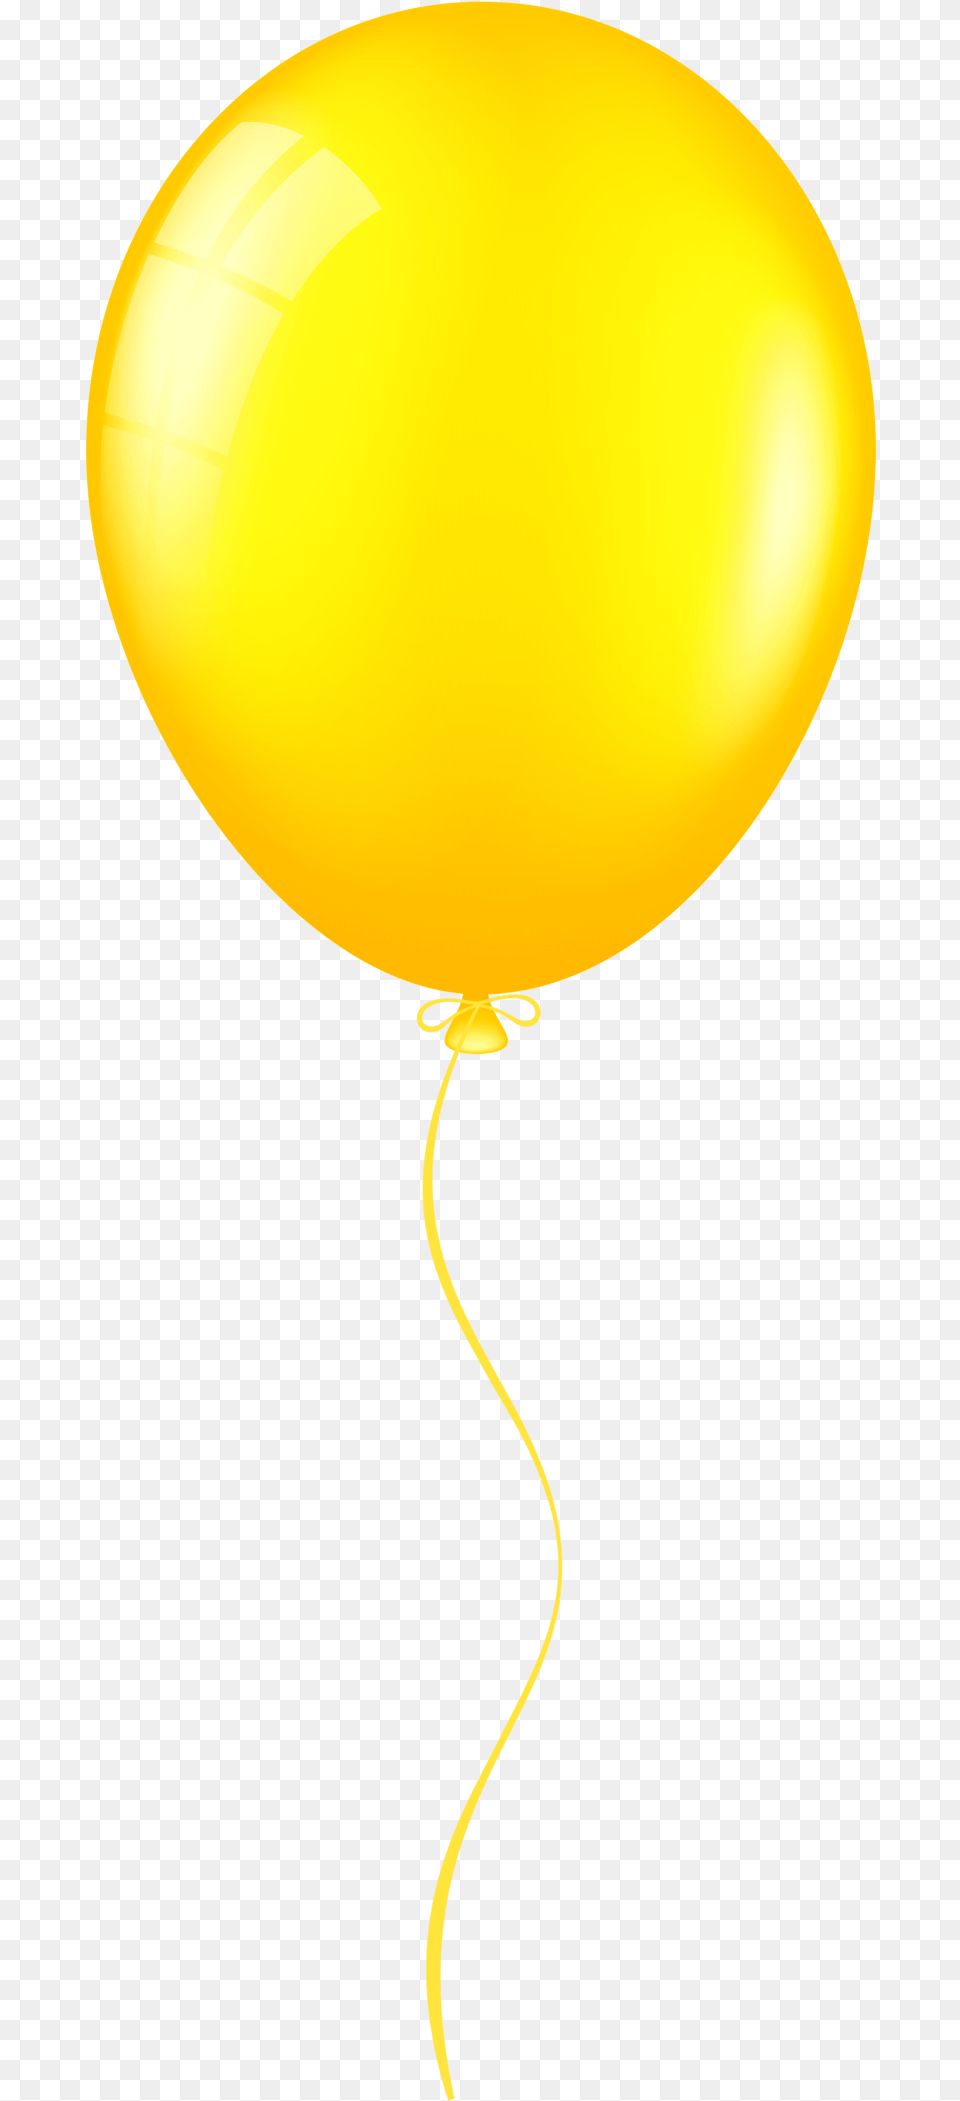 Download Dlpng Com Yellow Balloon Clip Arts Free Transparent Png